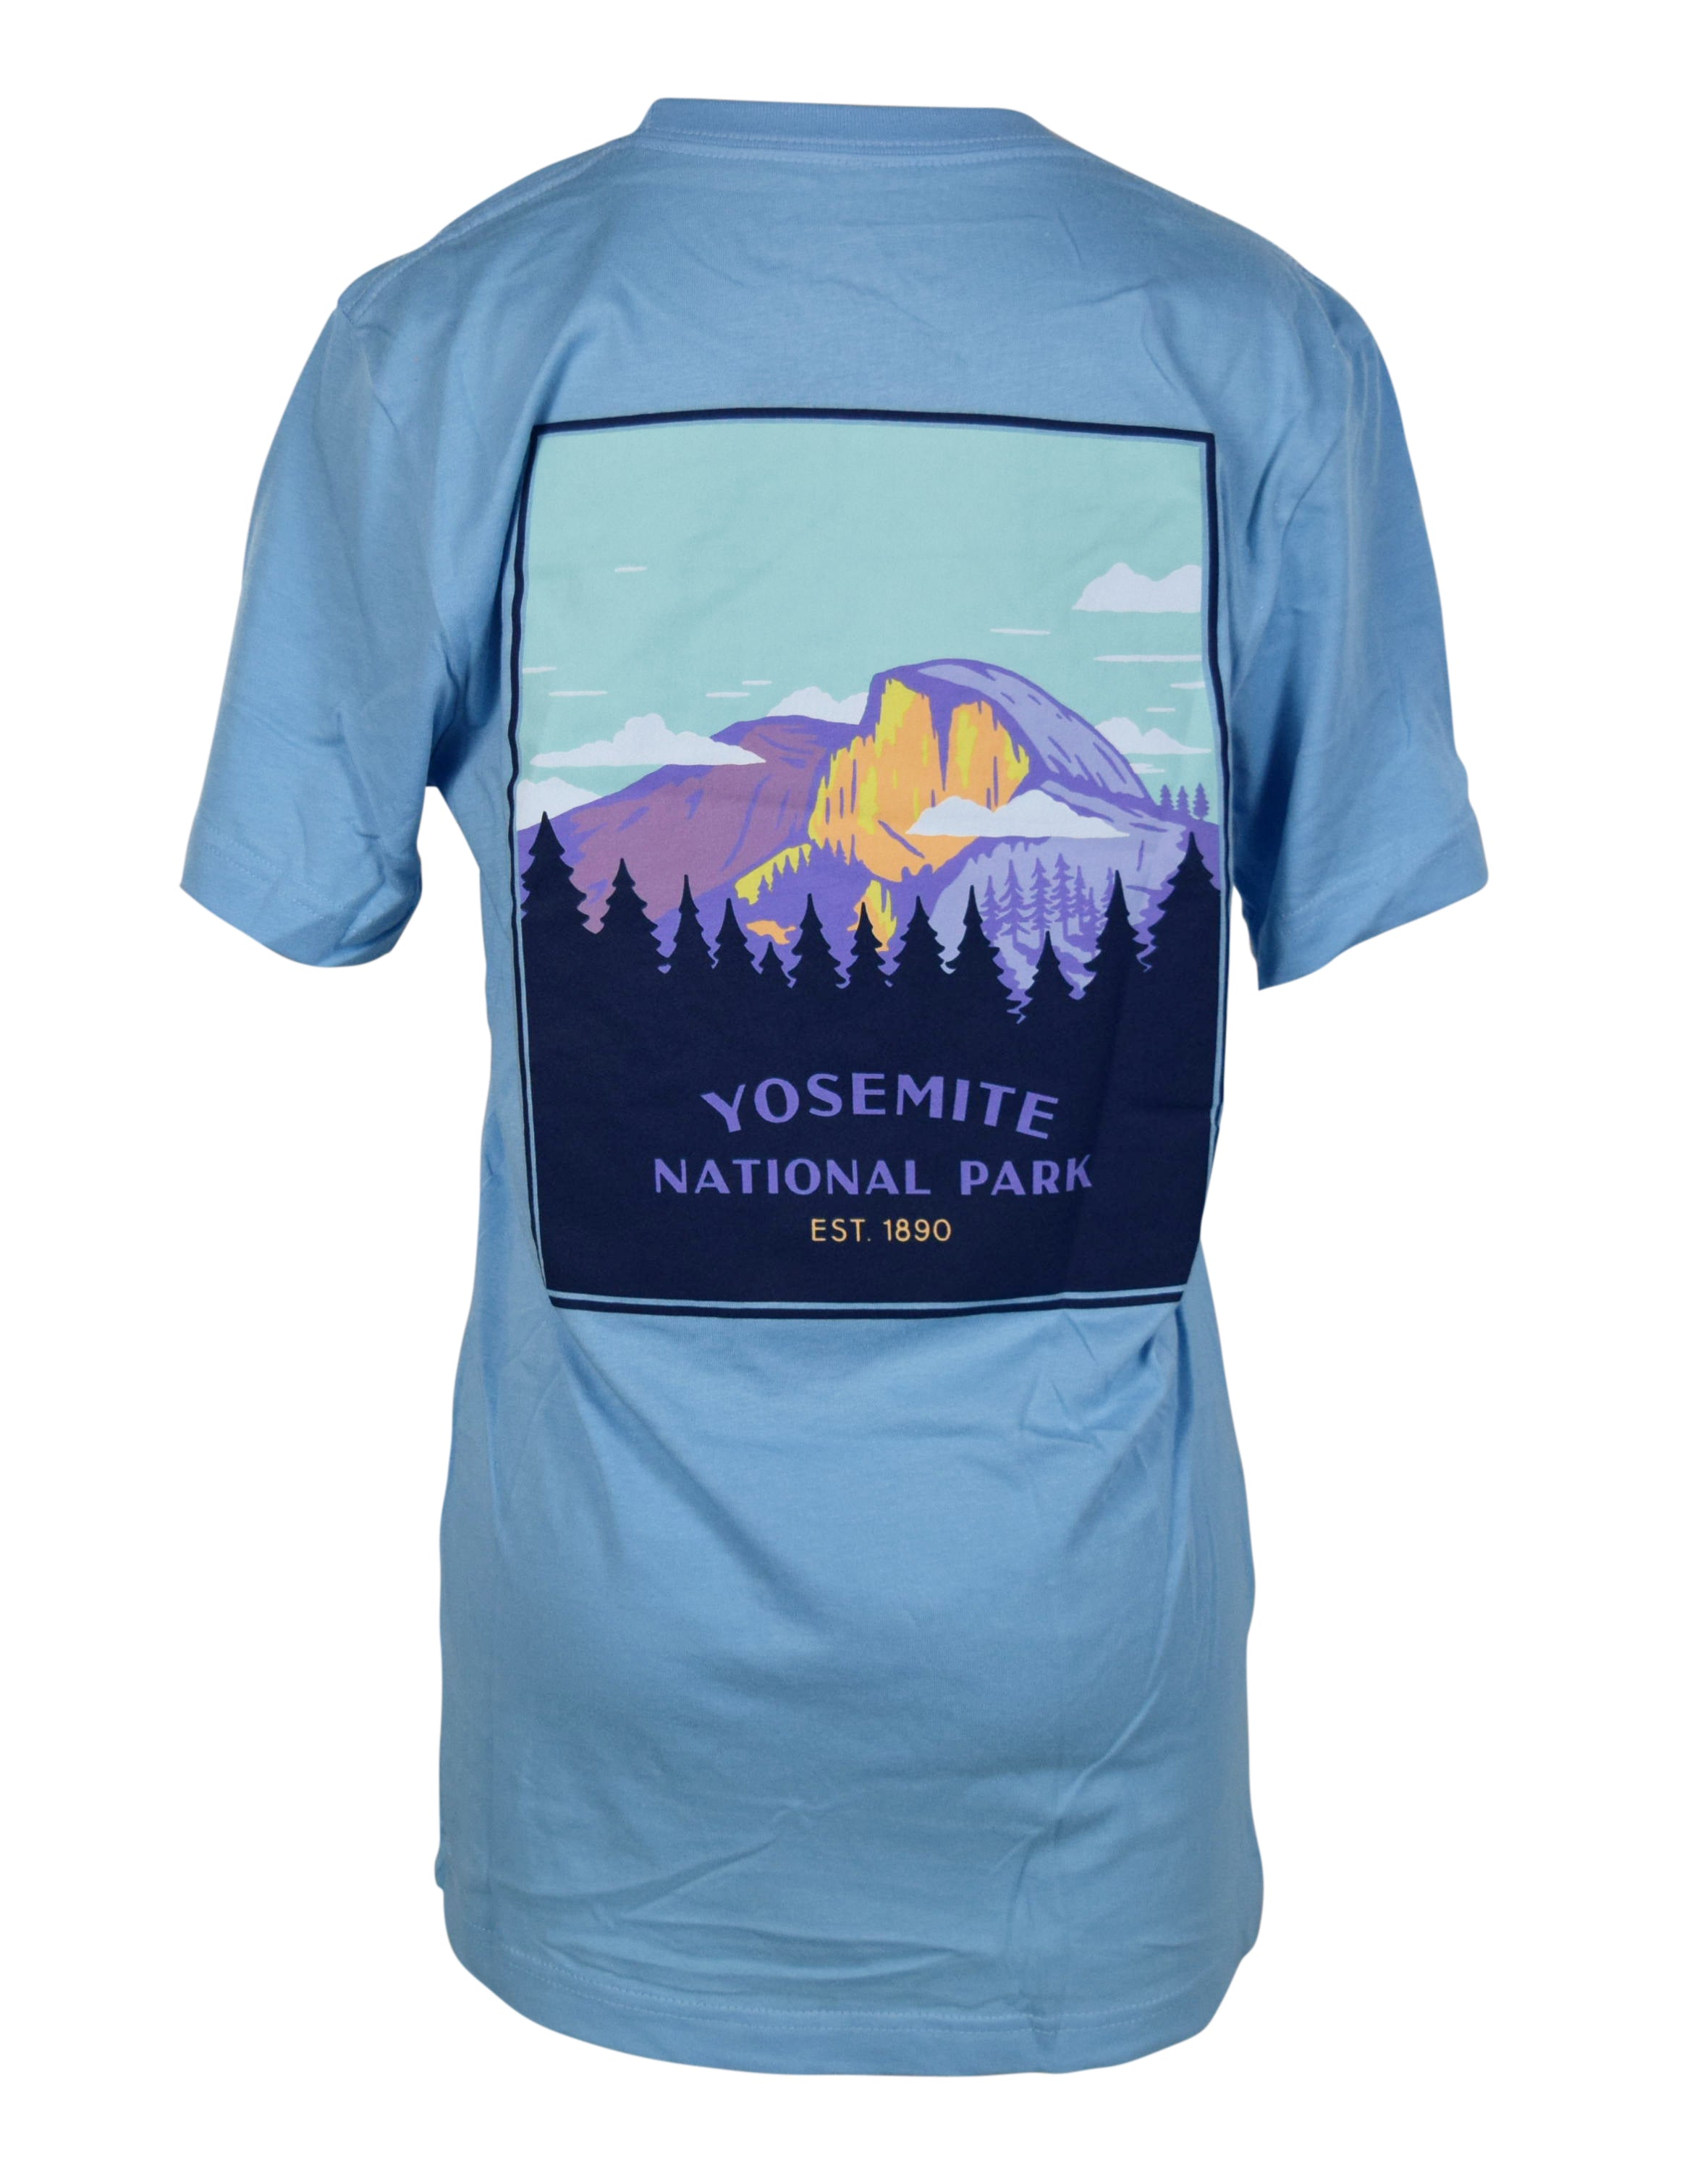 Sendero Provisions Co. Yosemite National Park "Ocean" T-Shirt (L)